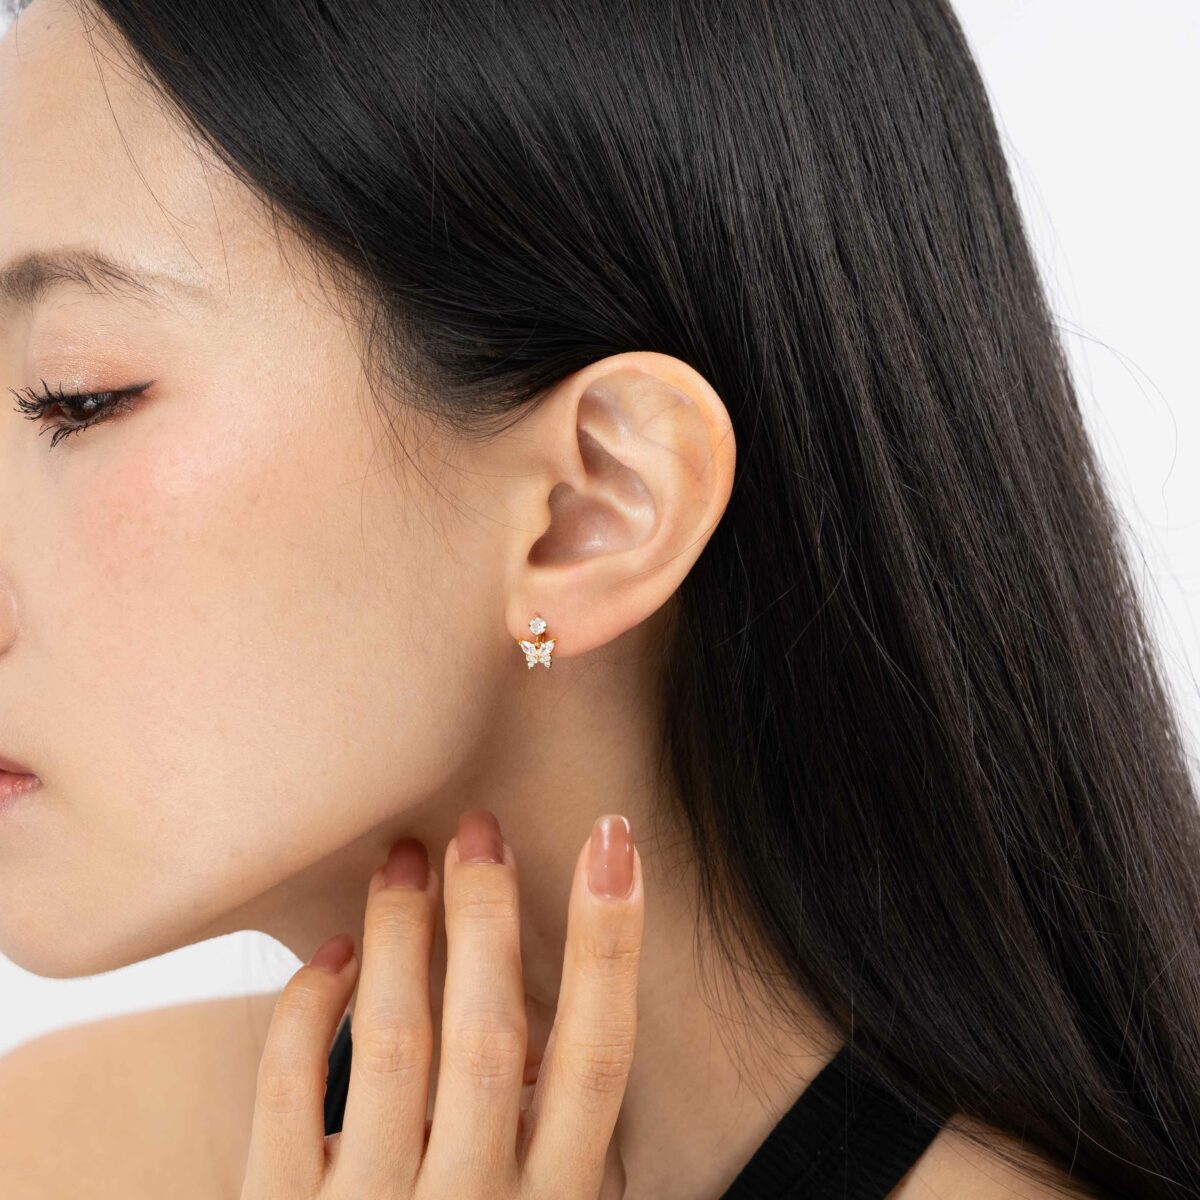 https://m.clubbella.co/product/papillon-earrings-24-k-gold-plated/ PAPILLON EARRINGS (1)